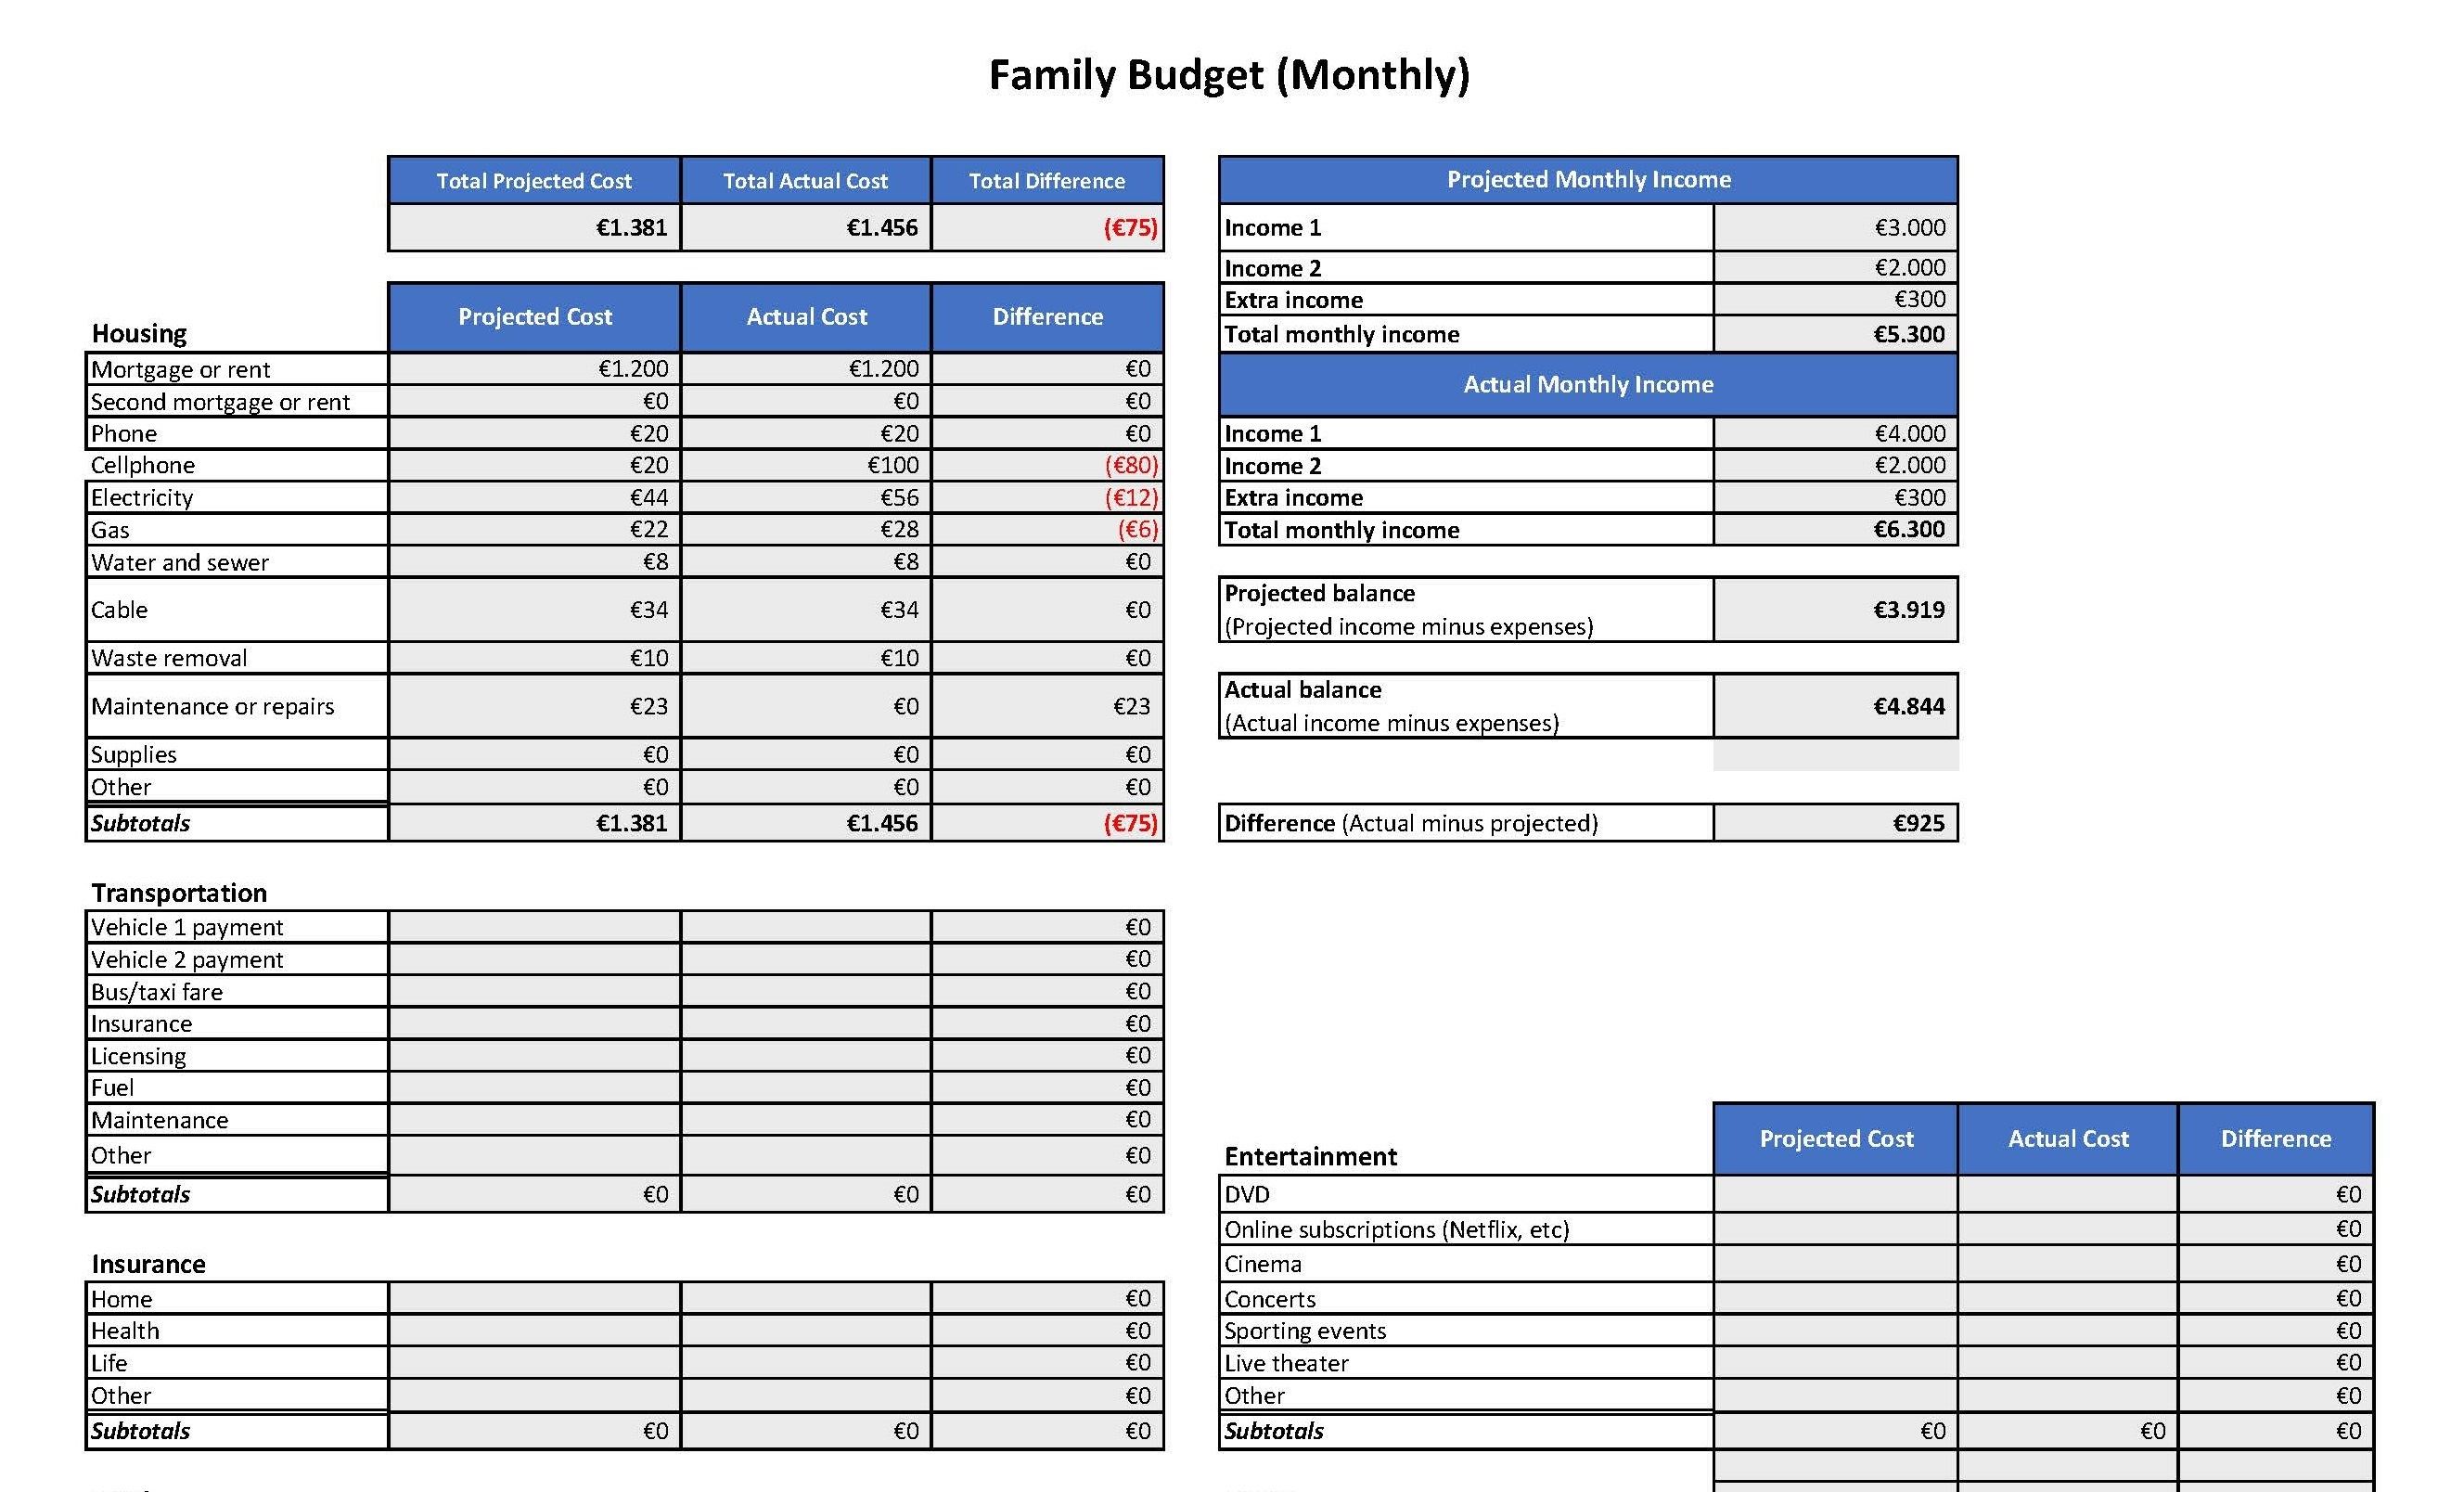 Family Budget Spreadsheet EUR main image